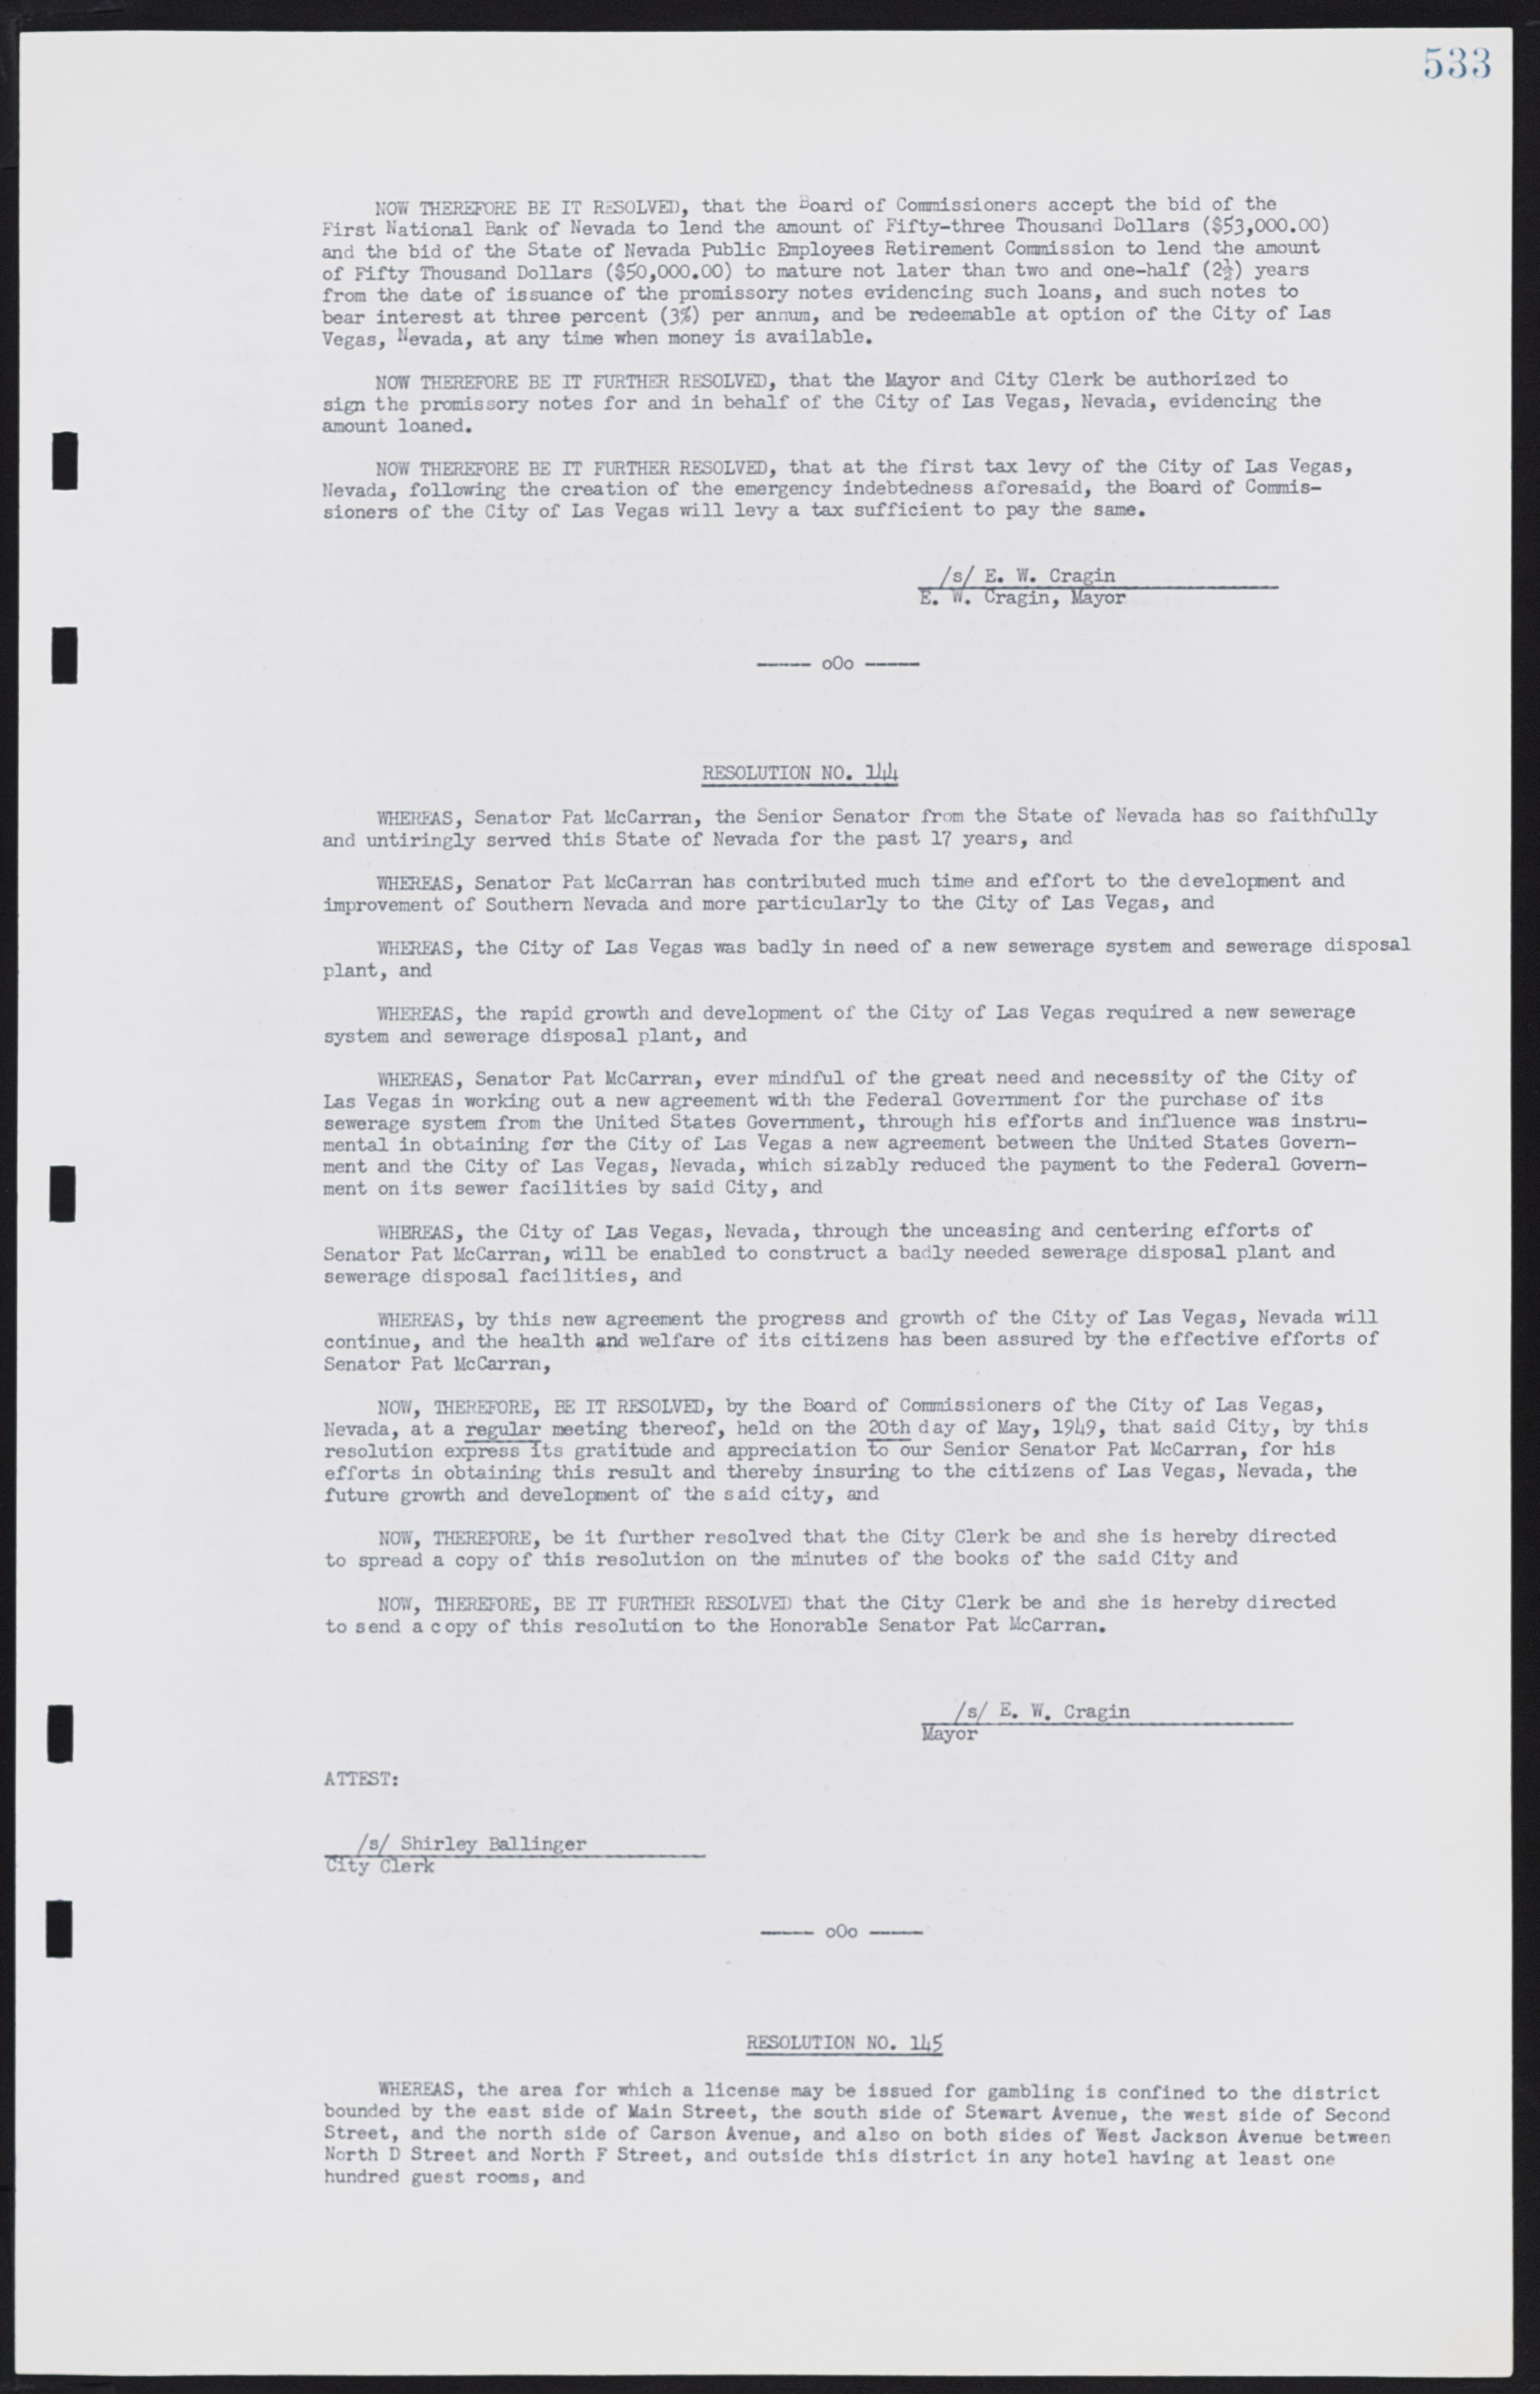 Las Vegas City Commission Minutes, January 7, 1947 to October 26, 1949, lvc000006-563